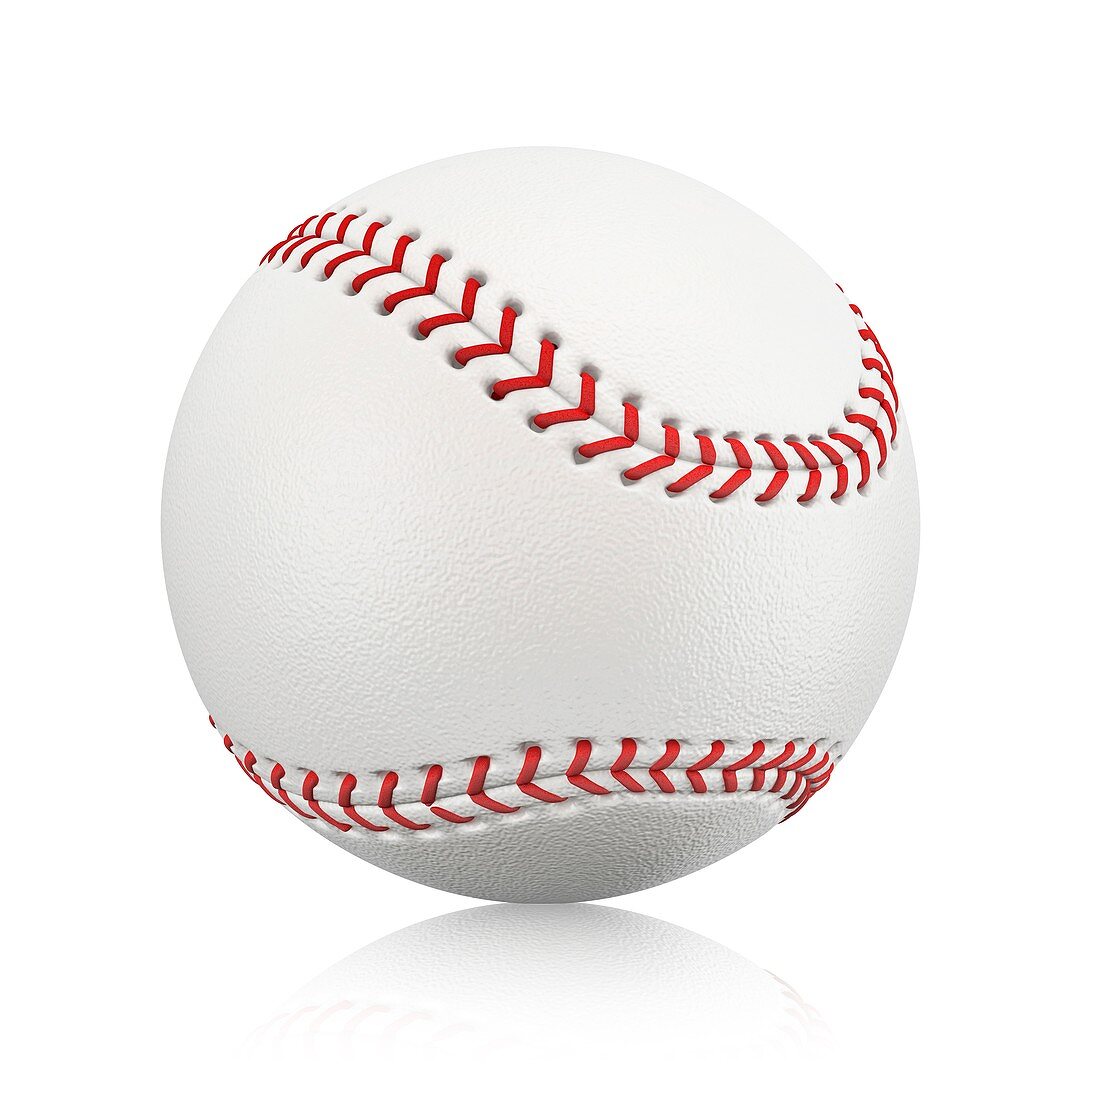 Baseball ball, illustration